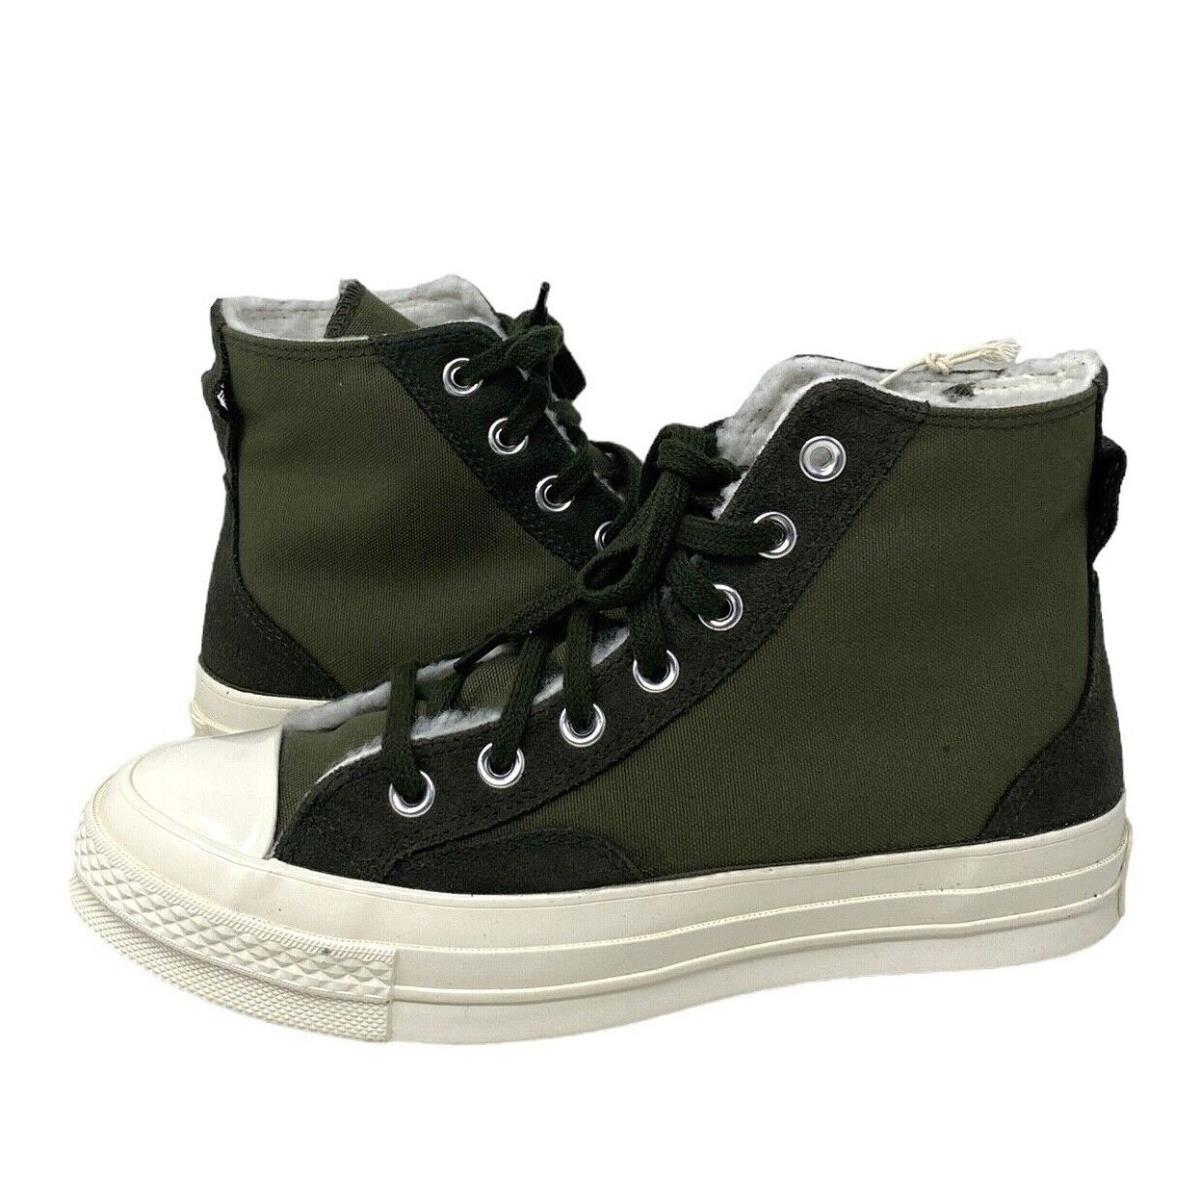 Converse Chuck 70 Shoes For Women Casual Canvas Khaki High Top Sneakers A05055C